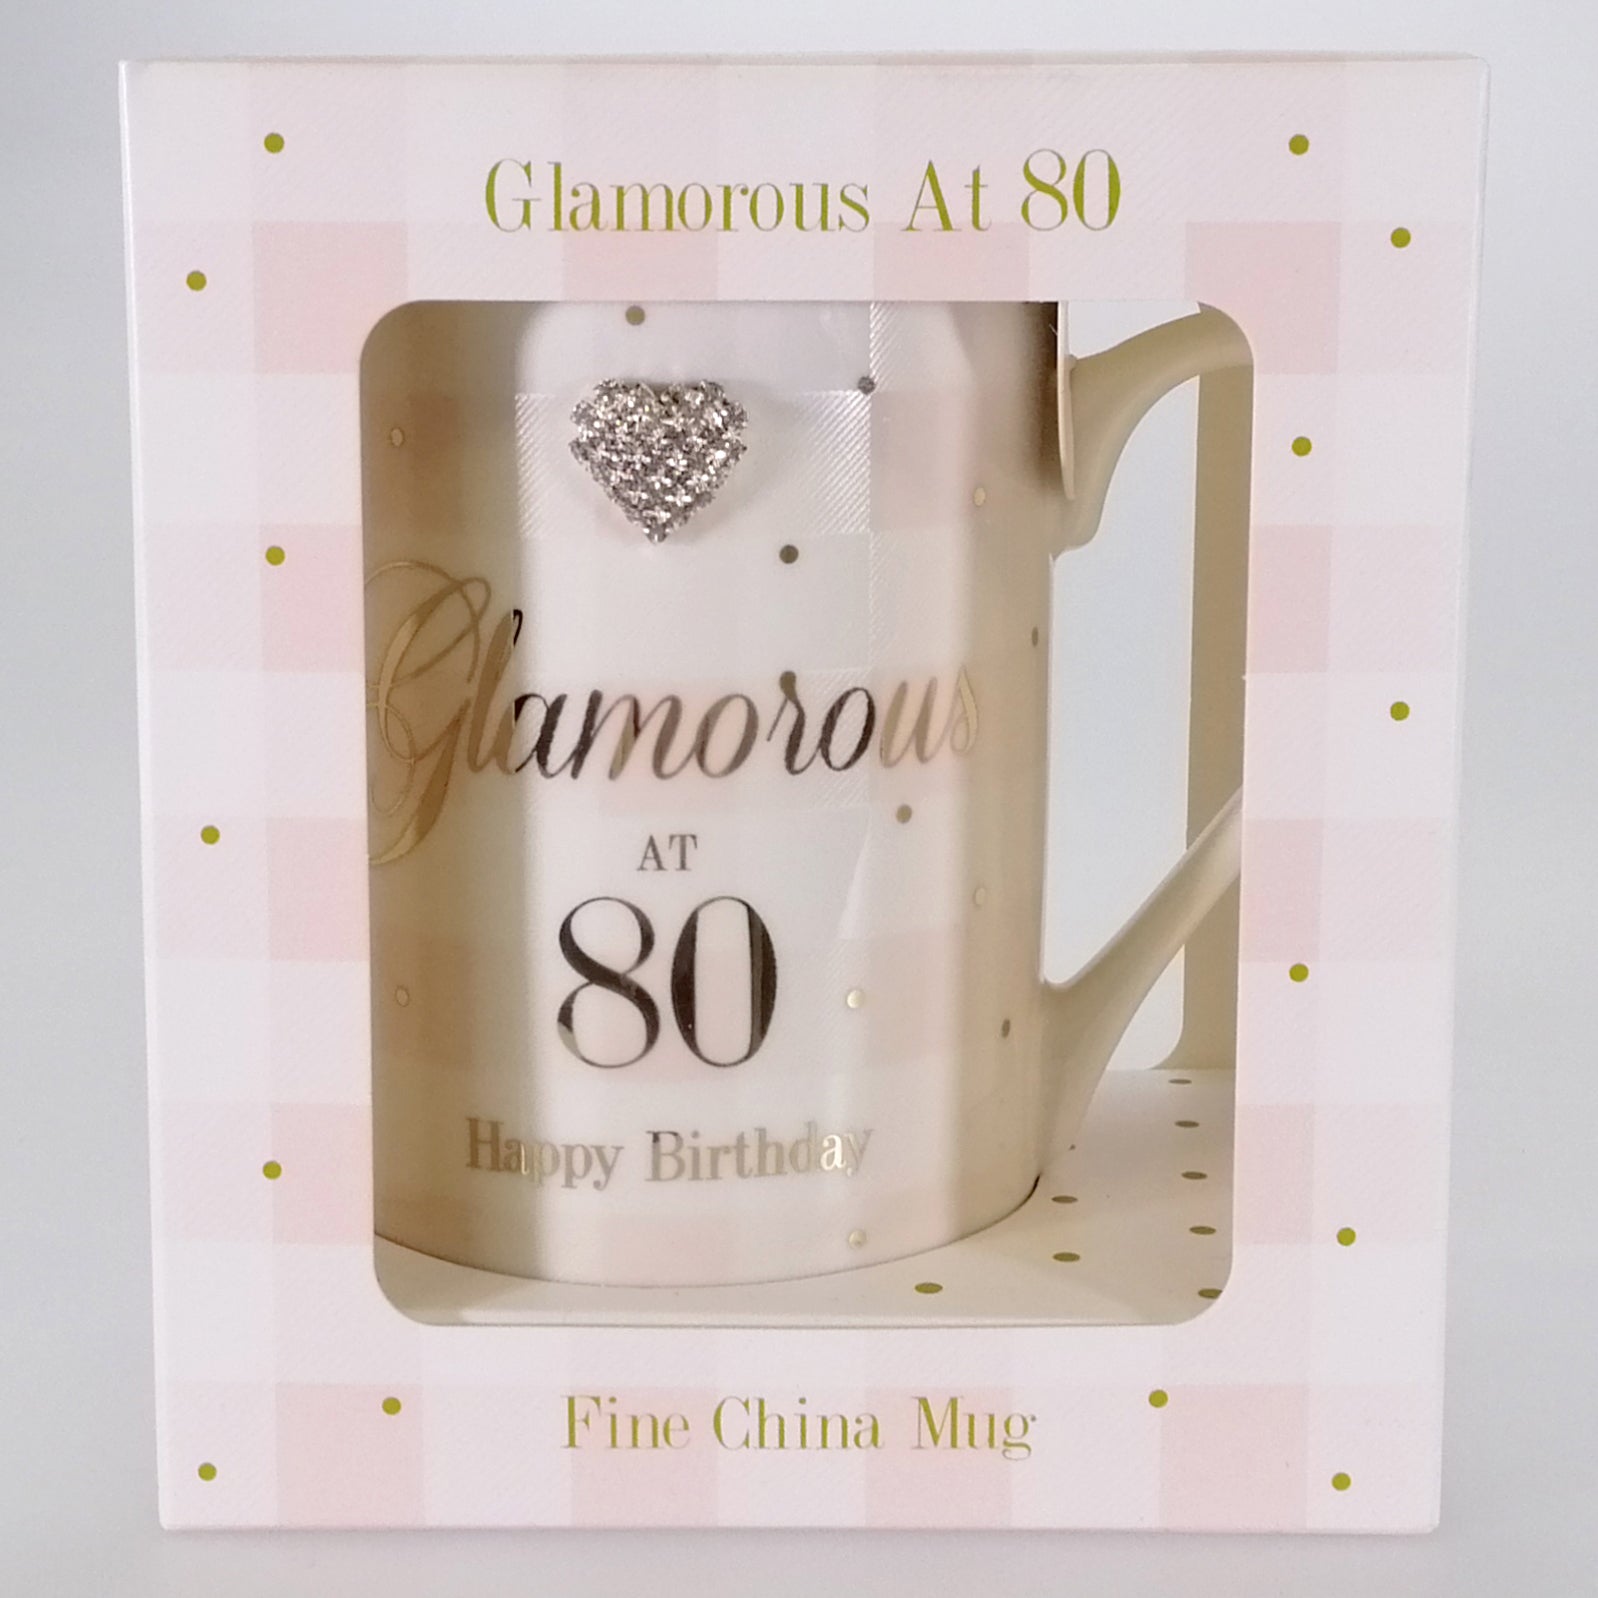 Glamorous at 80' Birthday Mug